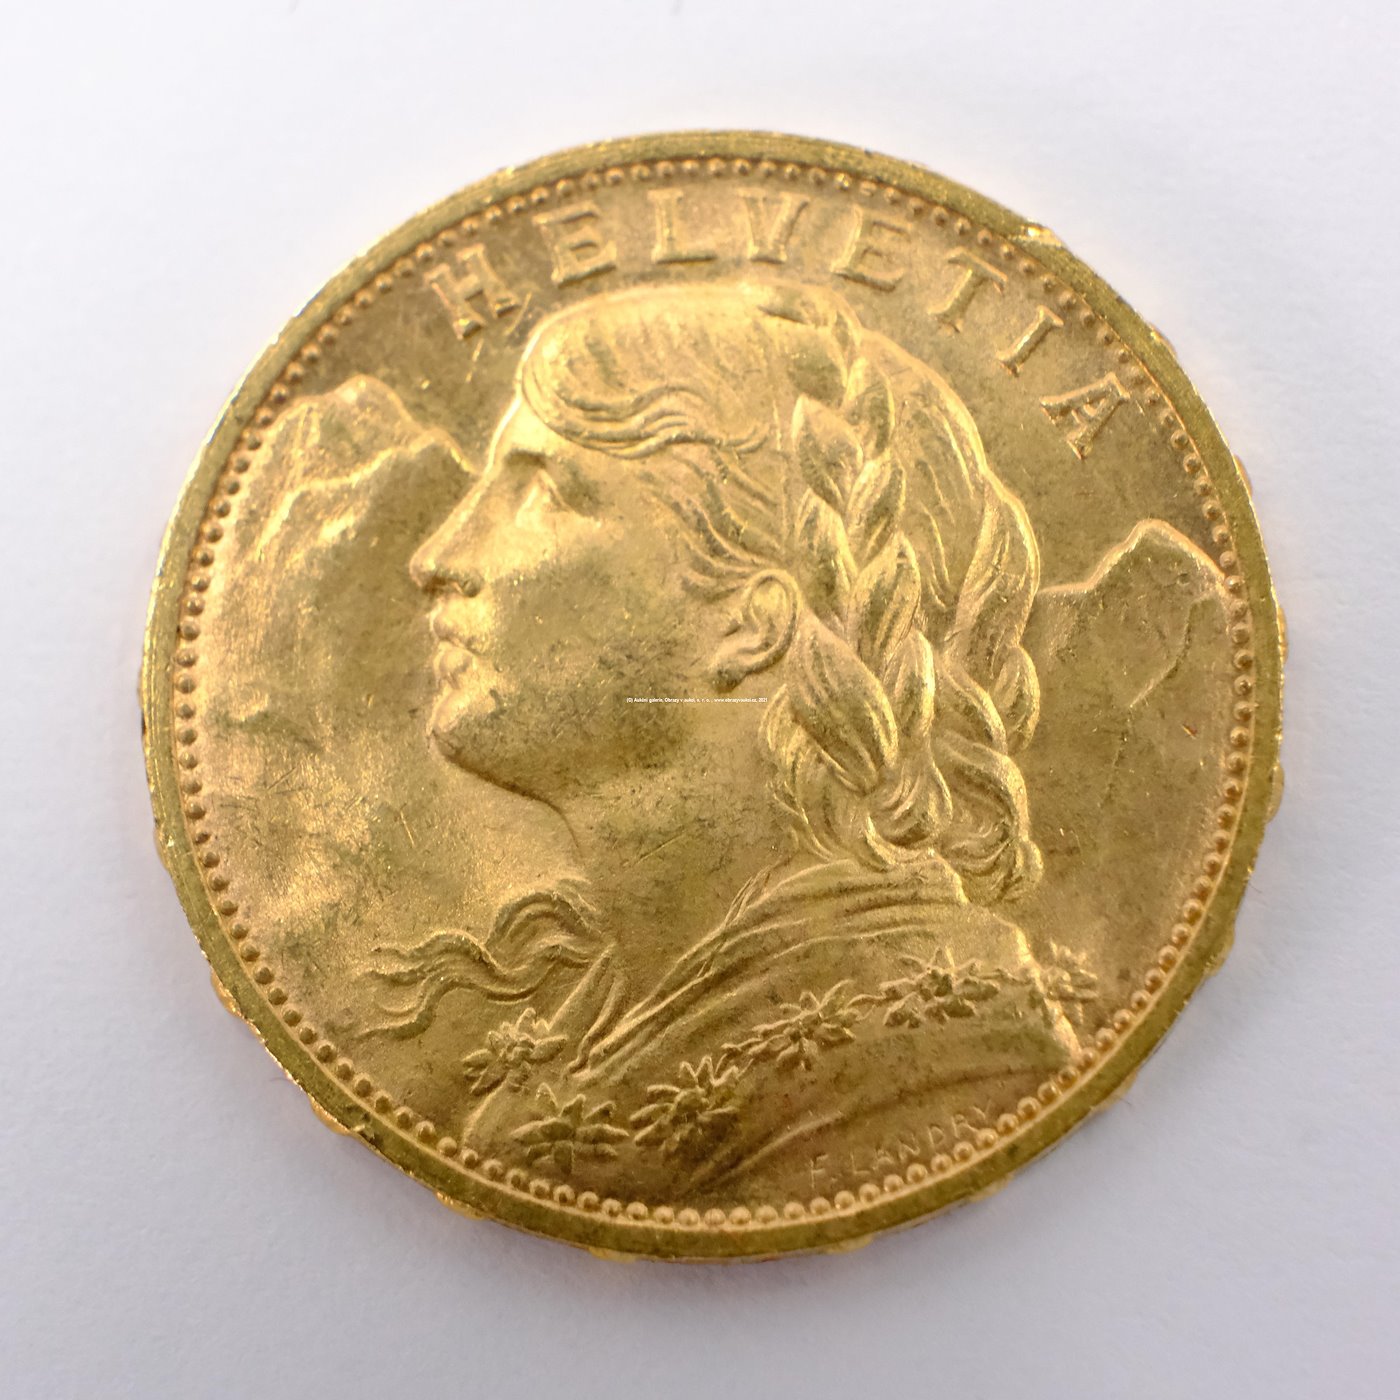 .. - Švýcarsko zlatý 20 frank VRENELI 1930. Zlato 900/1000, hrubá hmotnost 6,5g